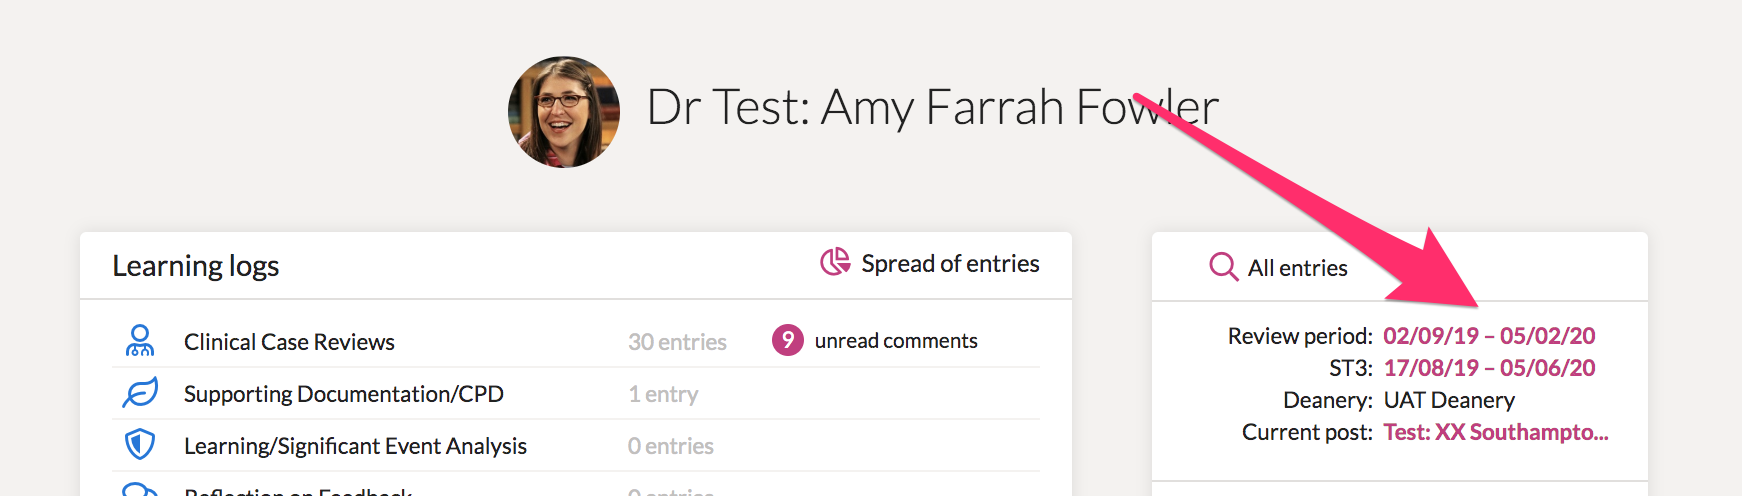 Dr_Test__Amy_Farrah_Fowler_-_FourteenFish.png